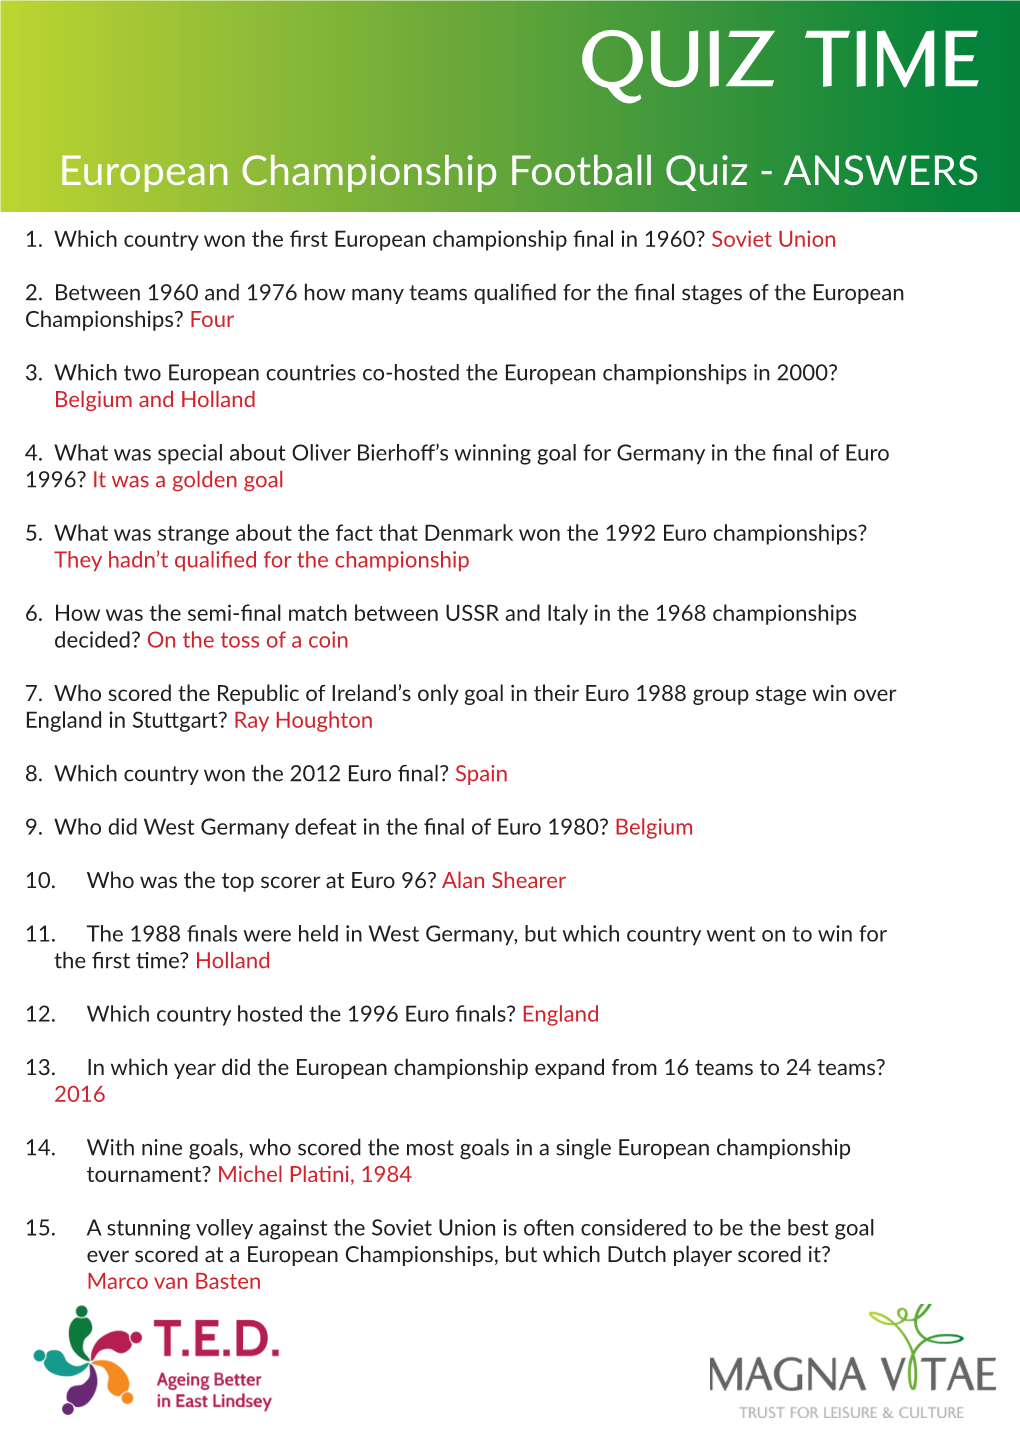 European Football Championship Quiz Answers